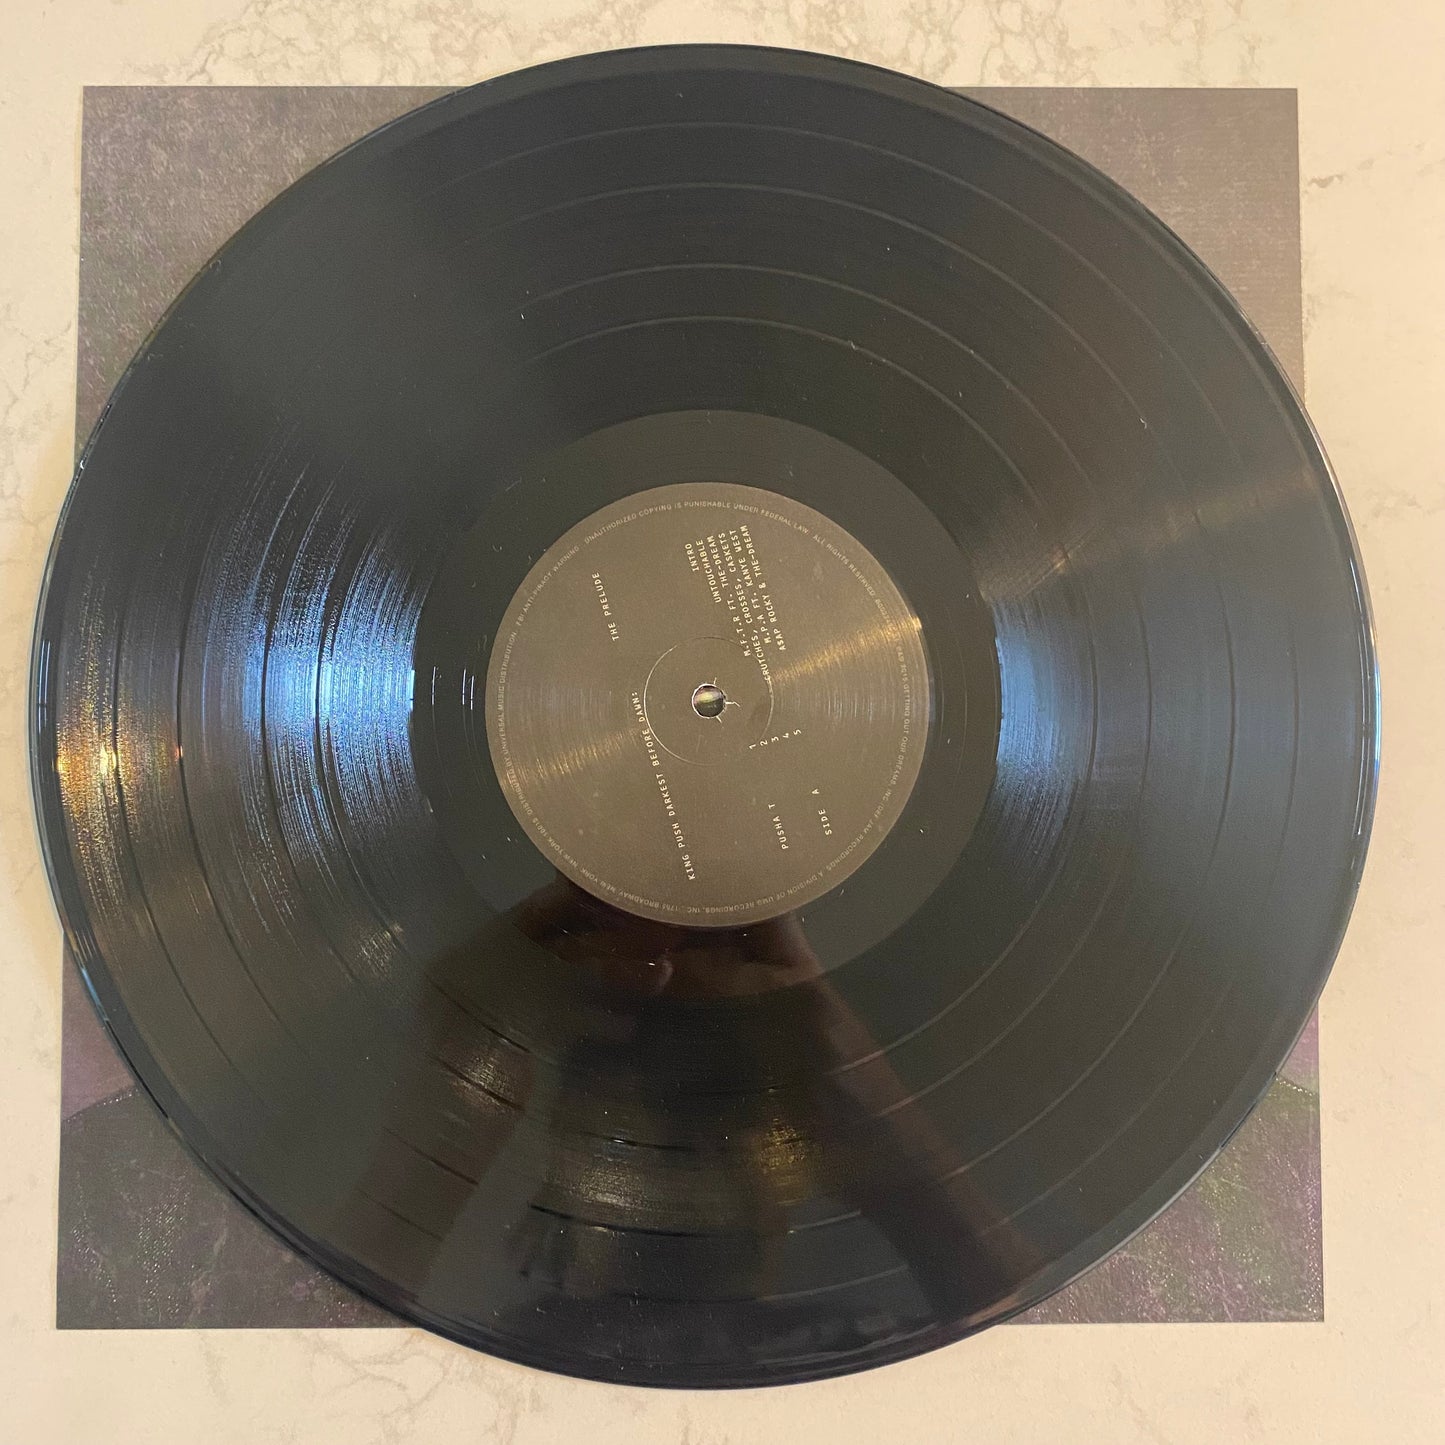 Pusha T - King Push – Darkest Before Dawn: The Prelude (LP, Album)